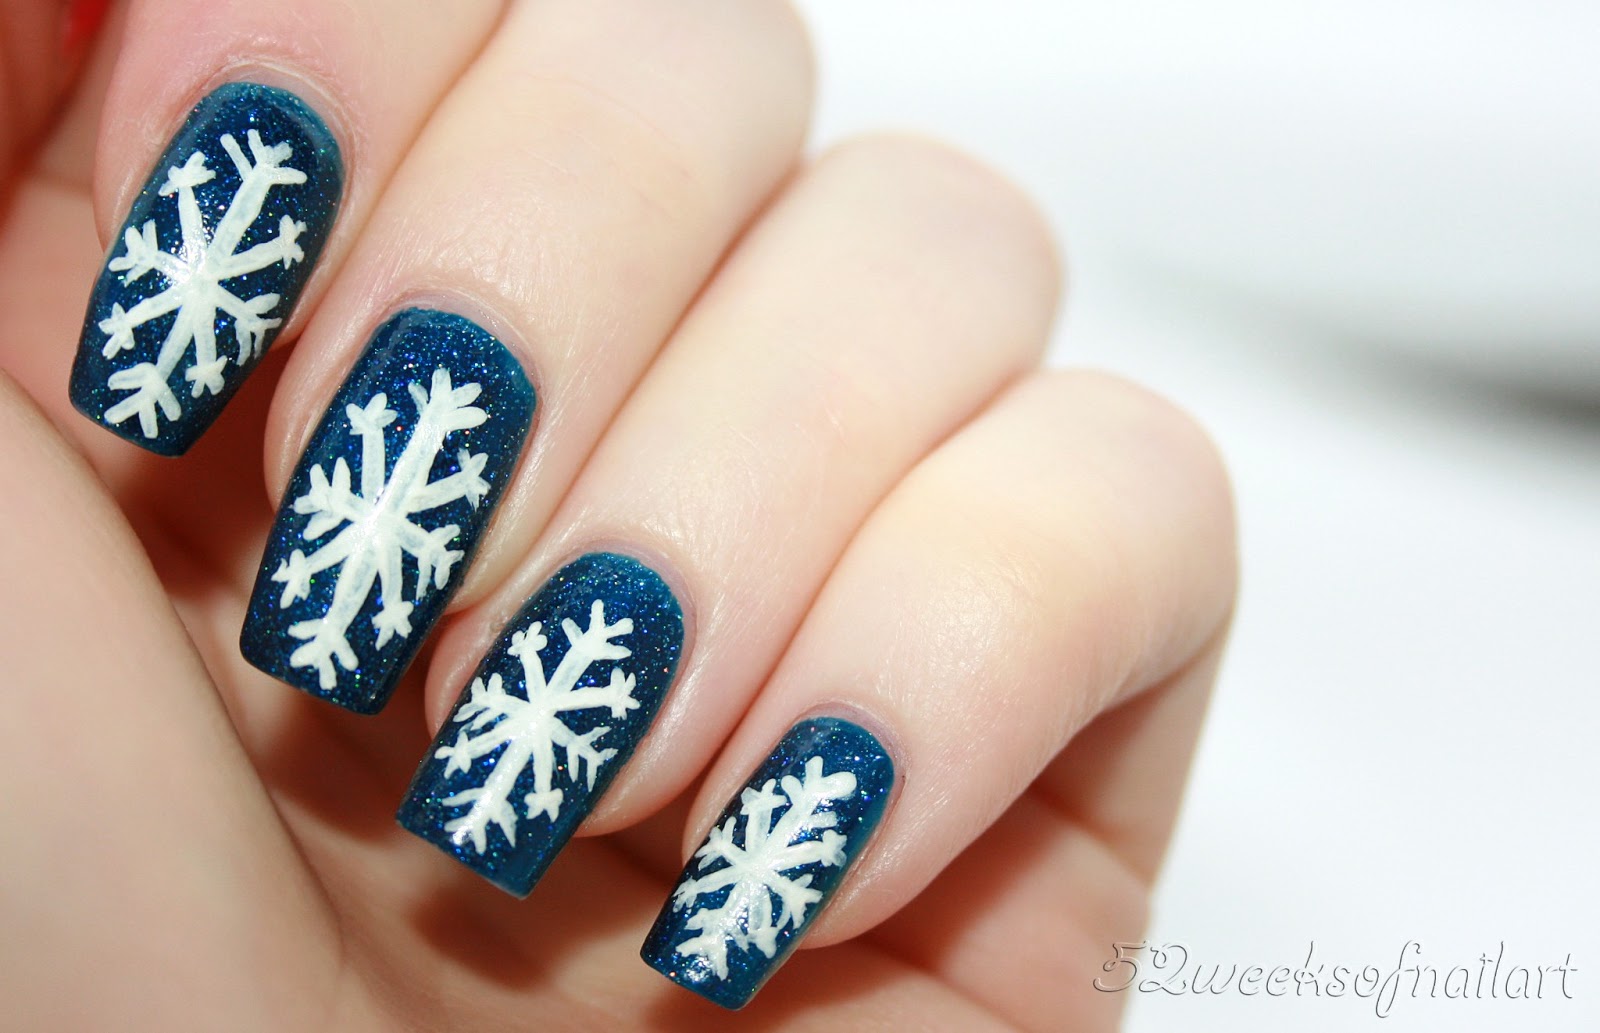 52weeksofnailart: Nail art: sparkly snowflakes